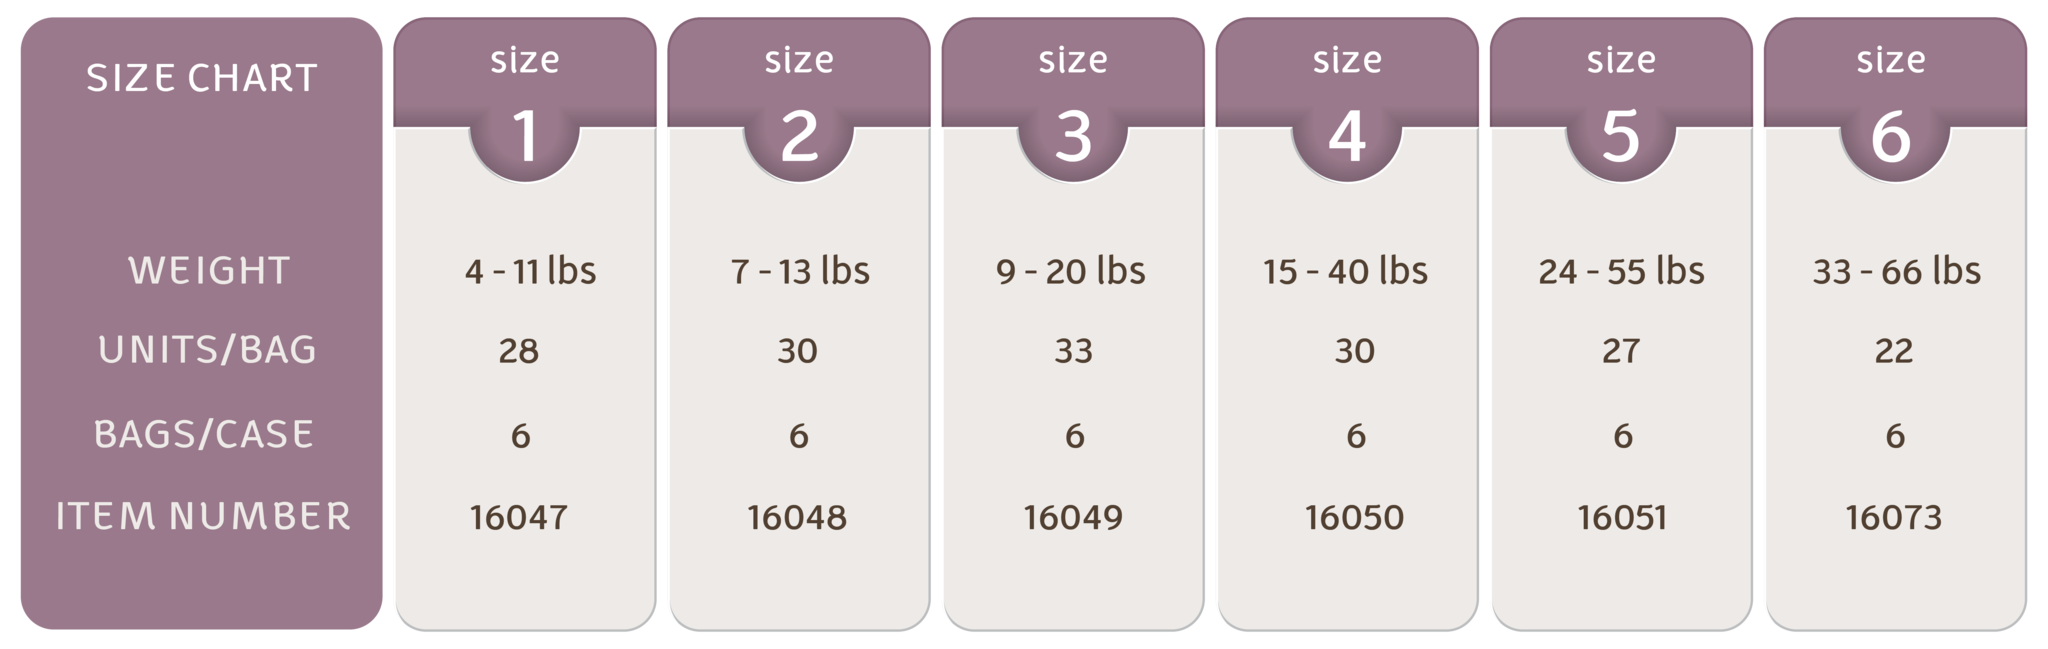 Cloth Diaper Size Chart